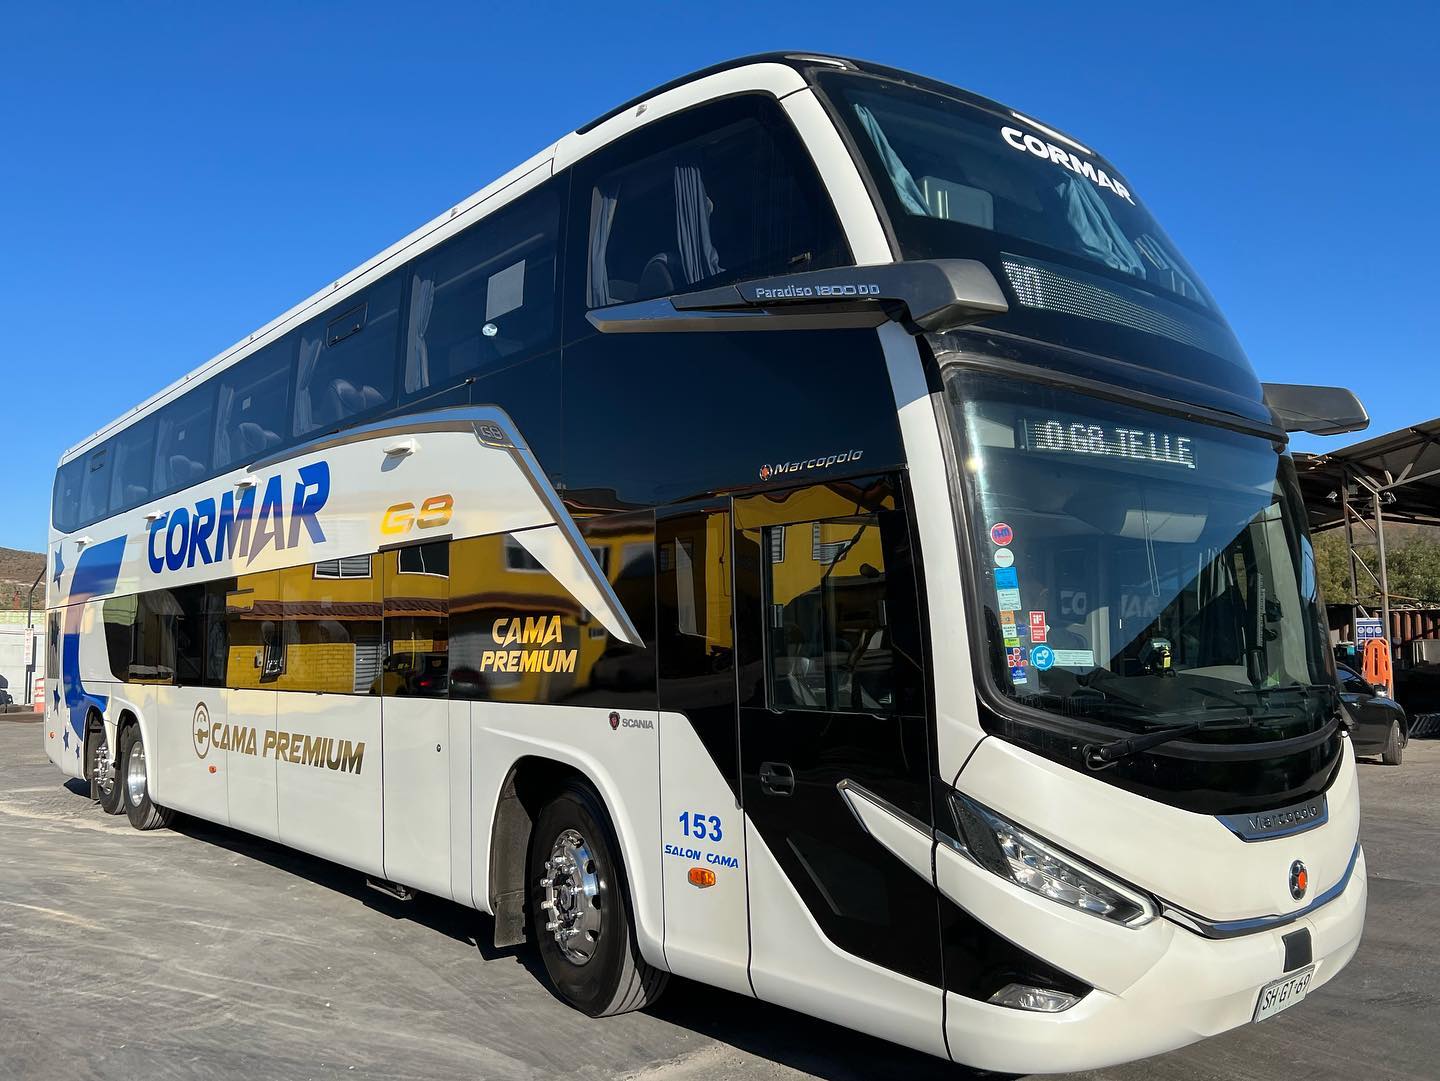 Marcopolo G8 Cormar Bus